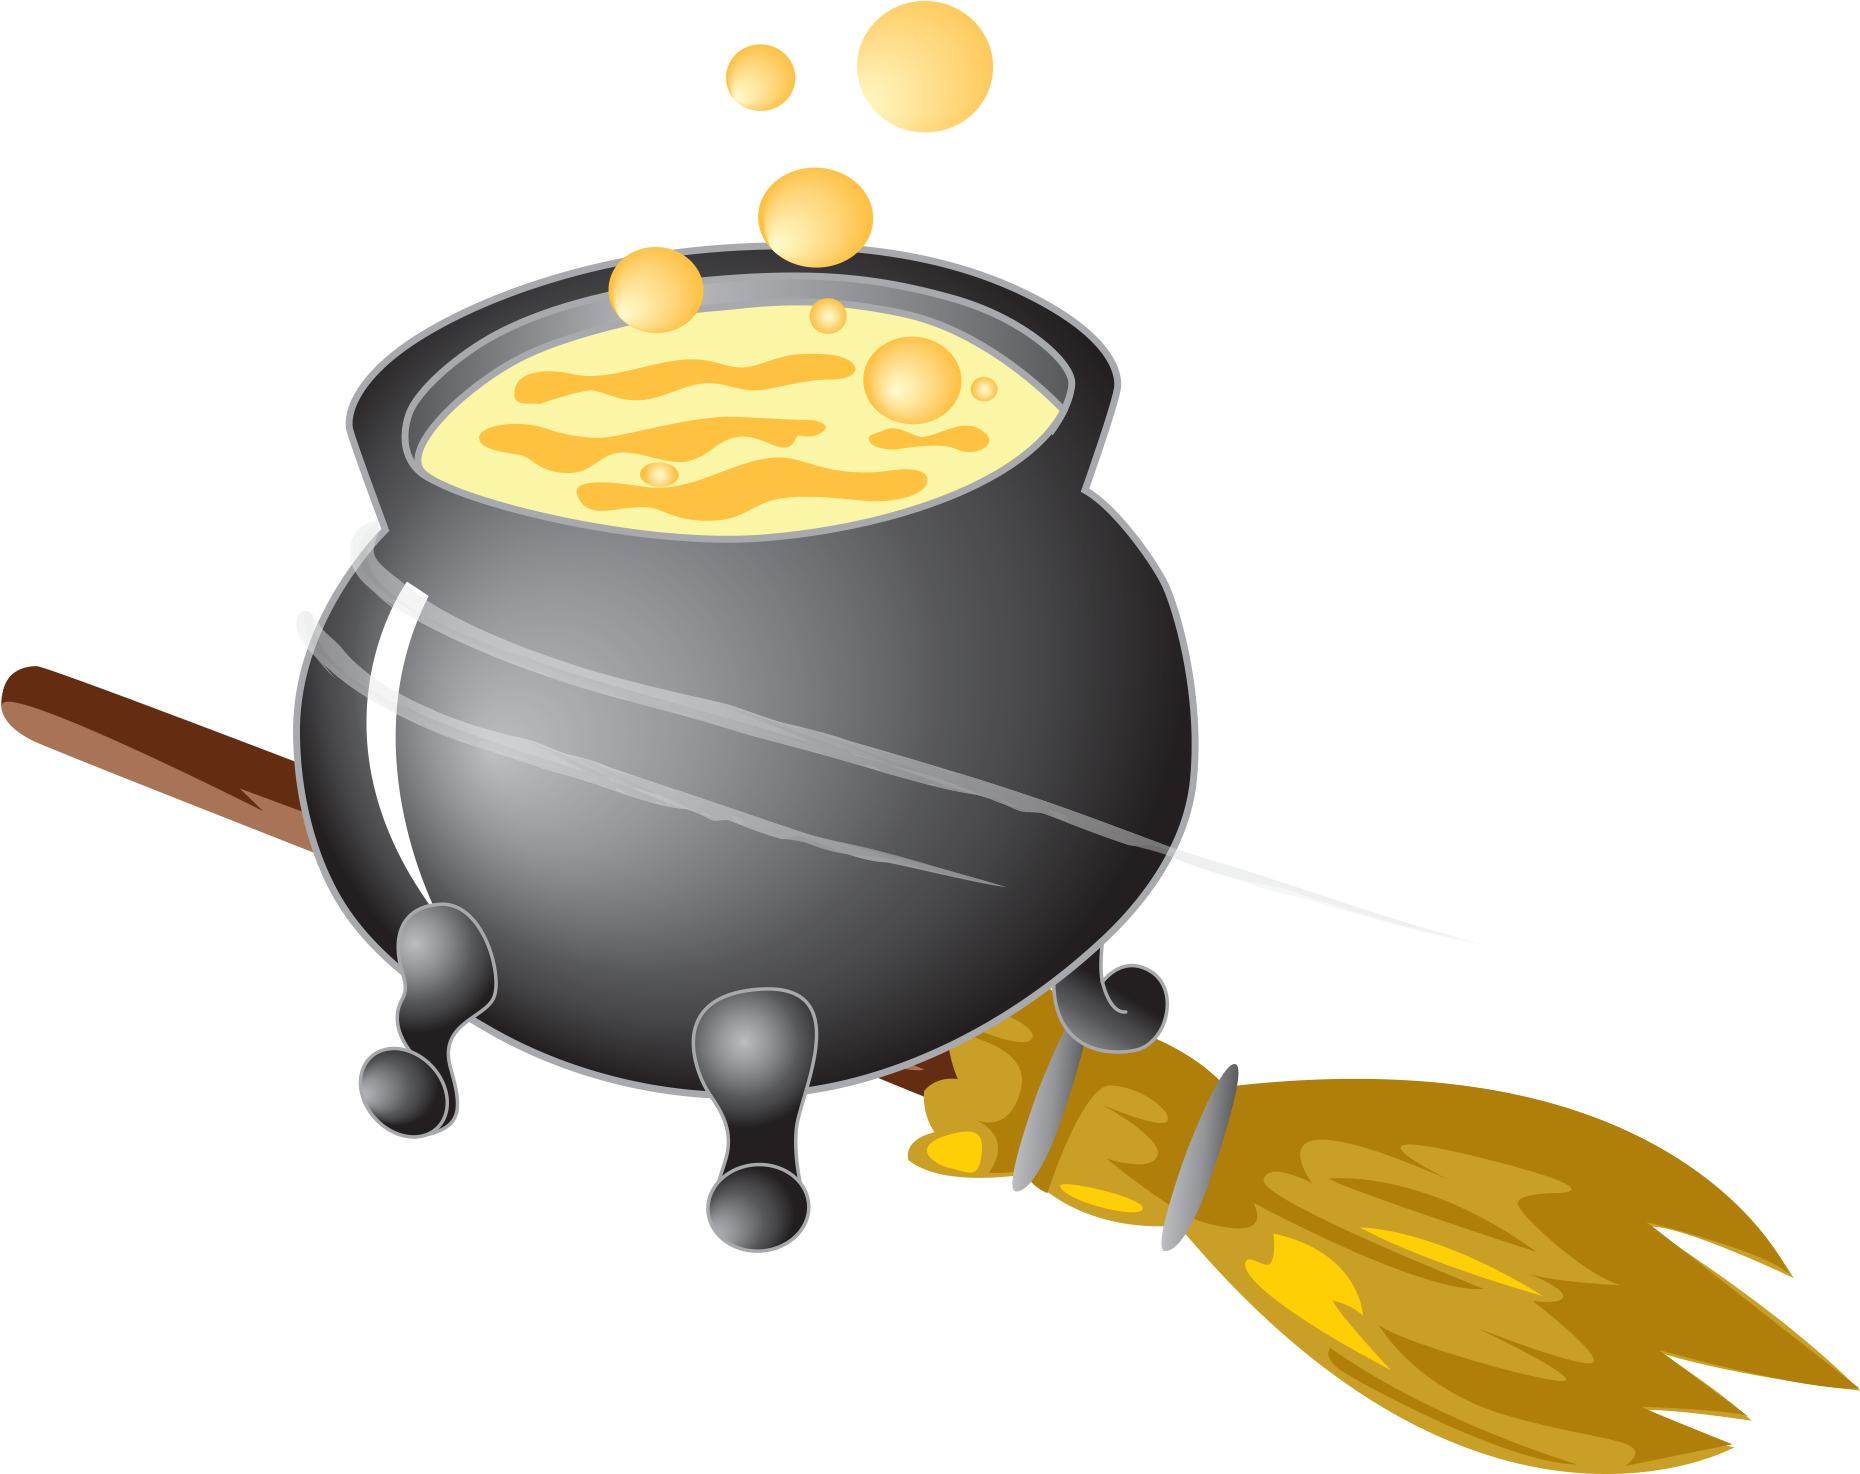 A Cartoon Of A Cauldron With A Broom